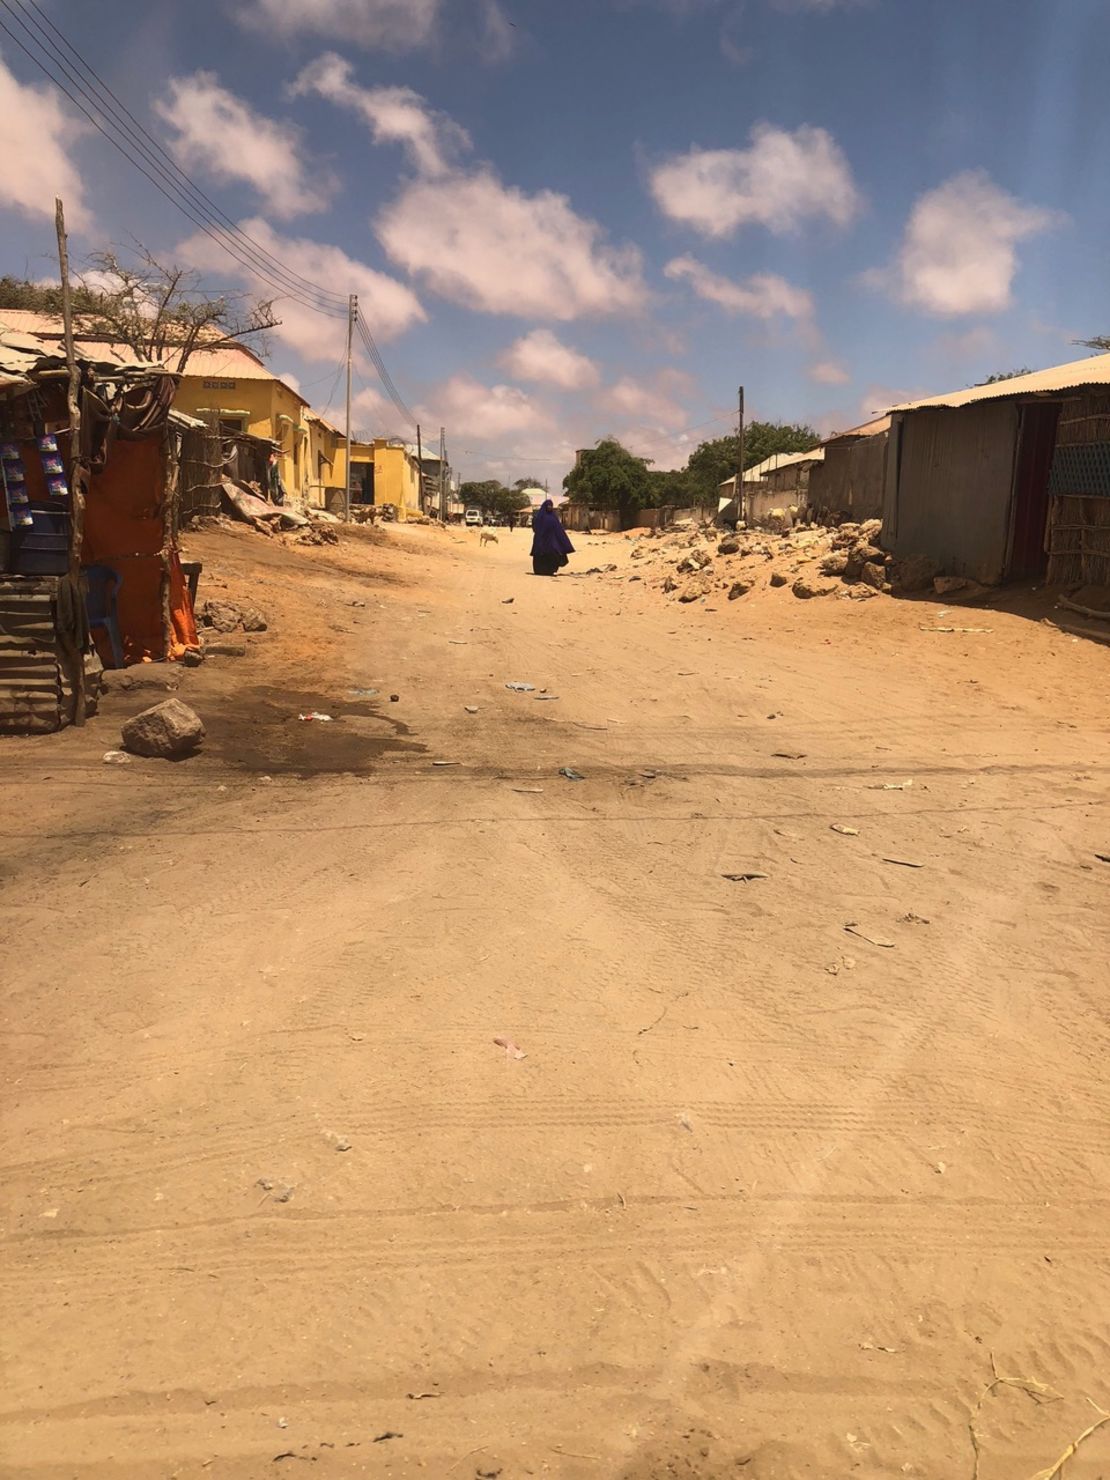  A woman walks along a street in the Somalian port city of Kismayo.